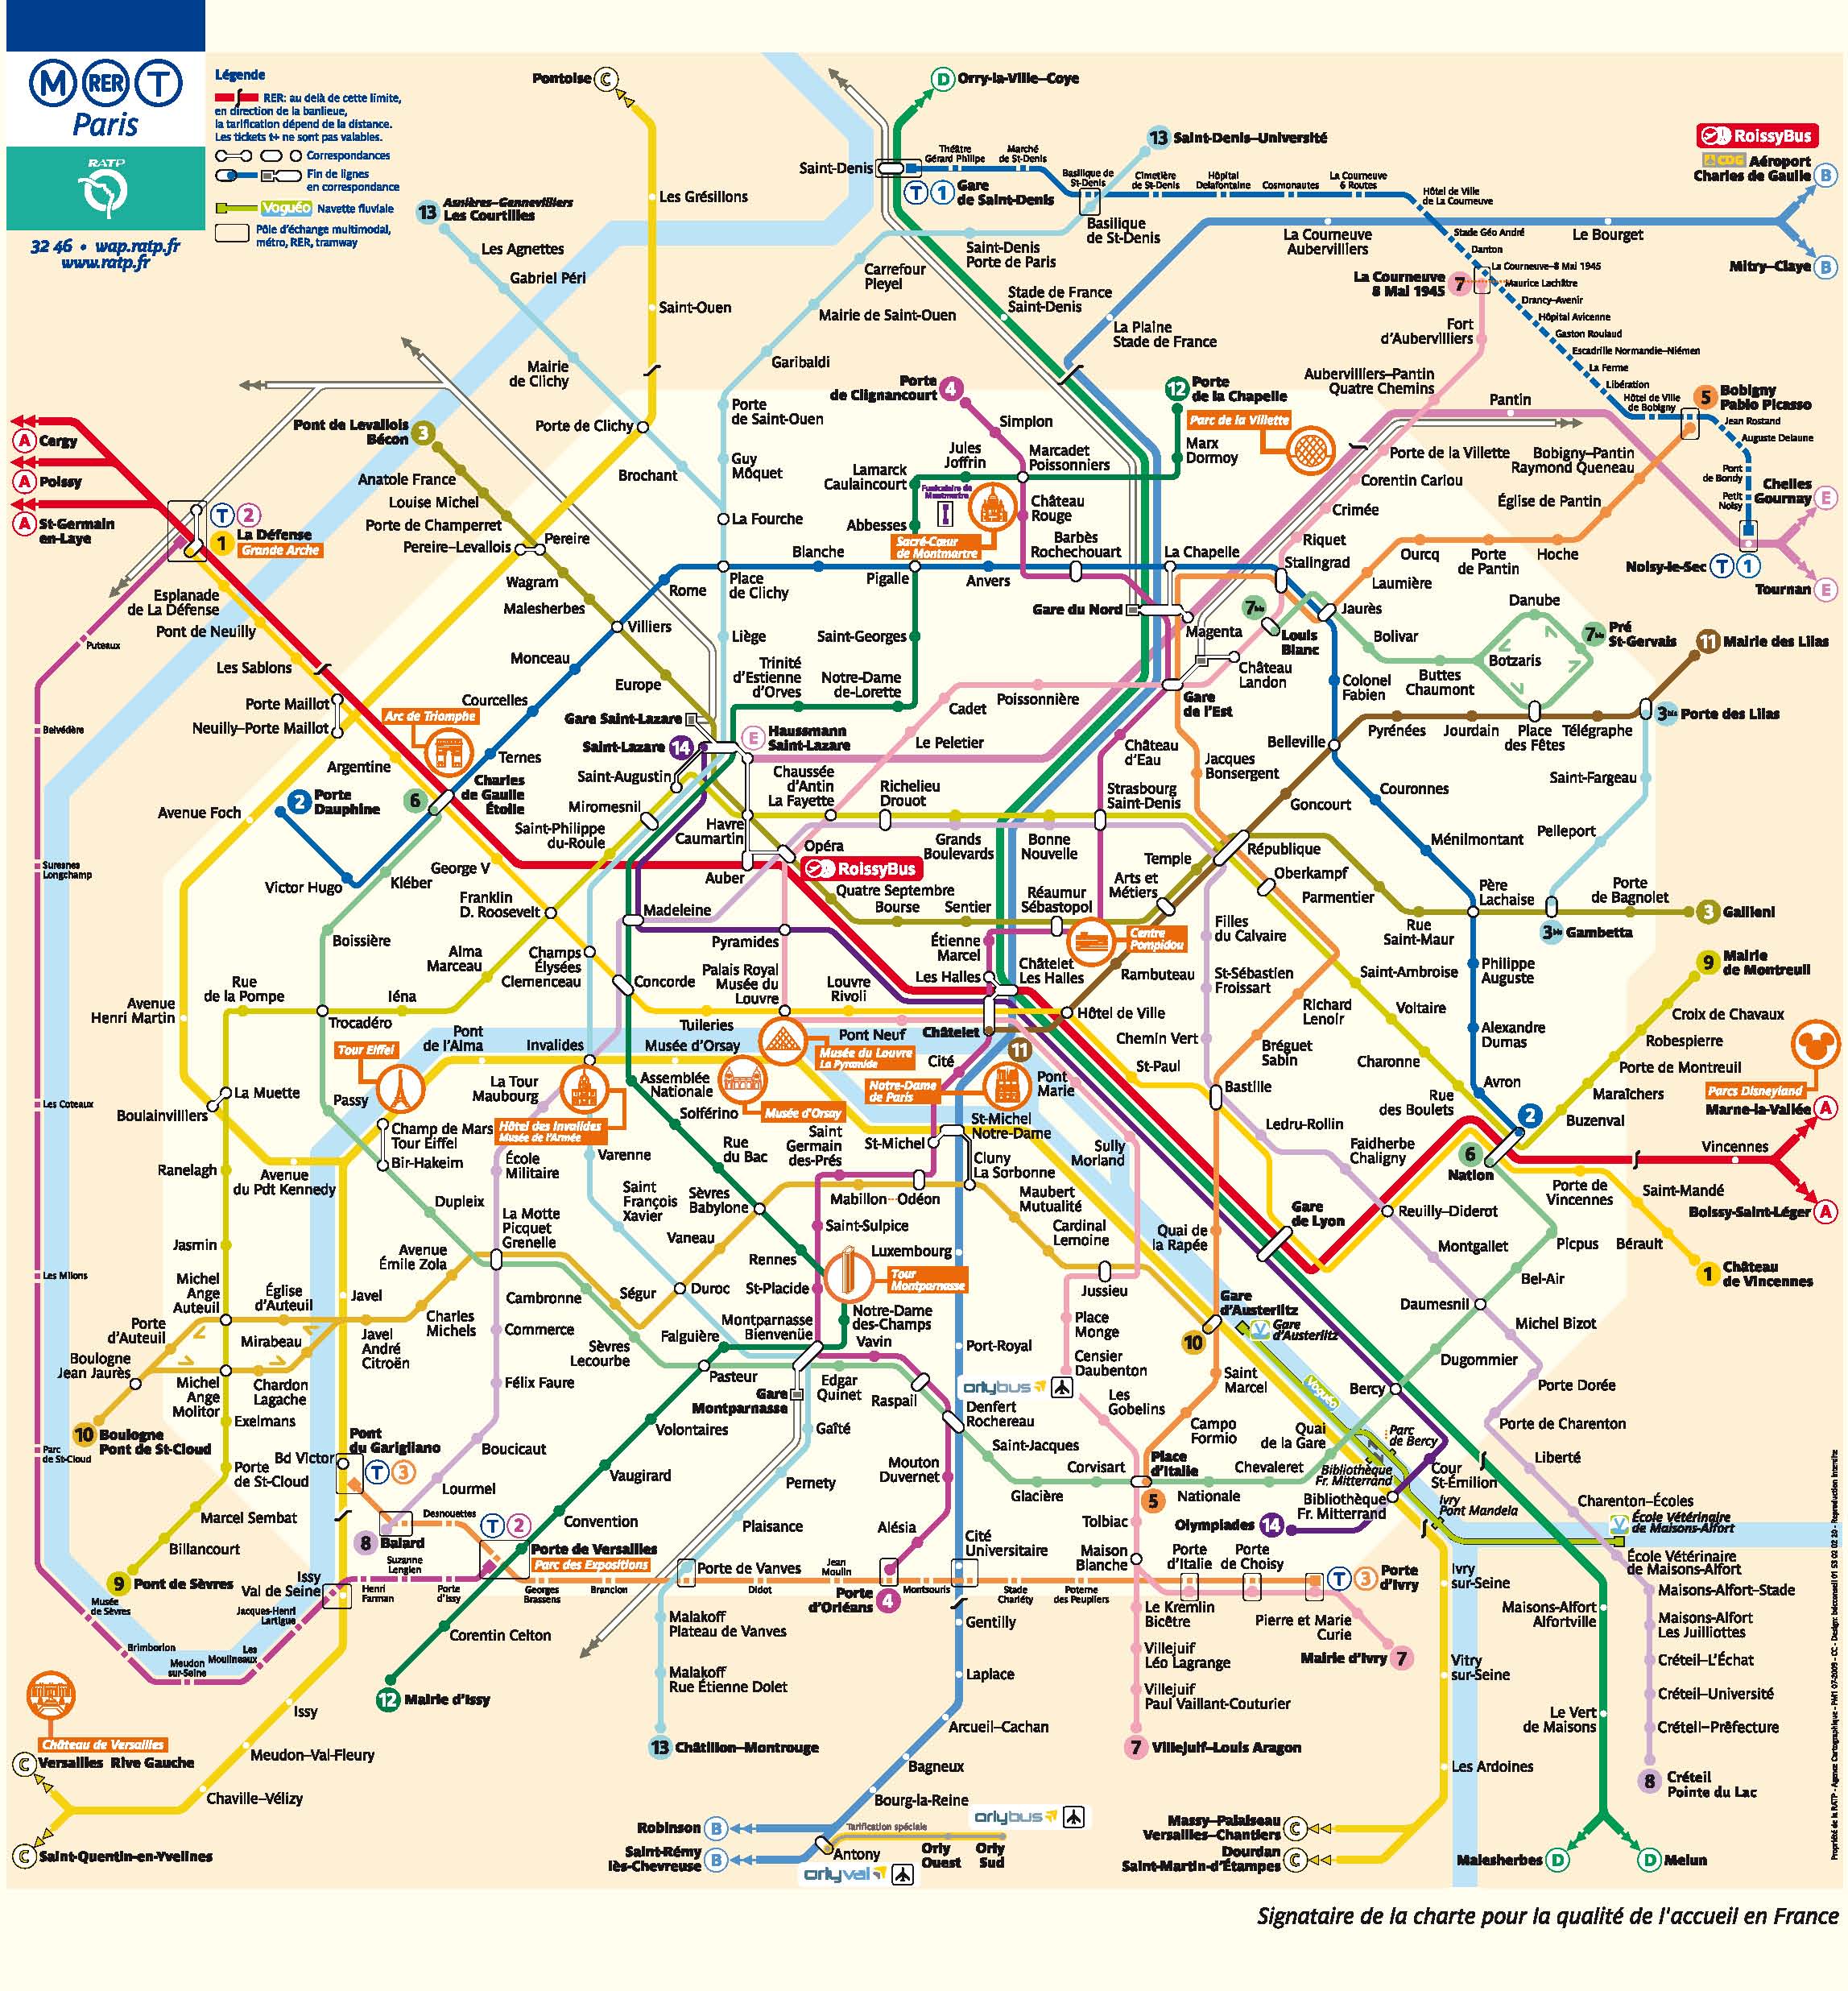 paris travel time map